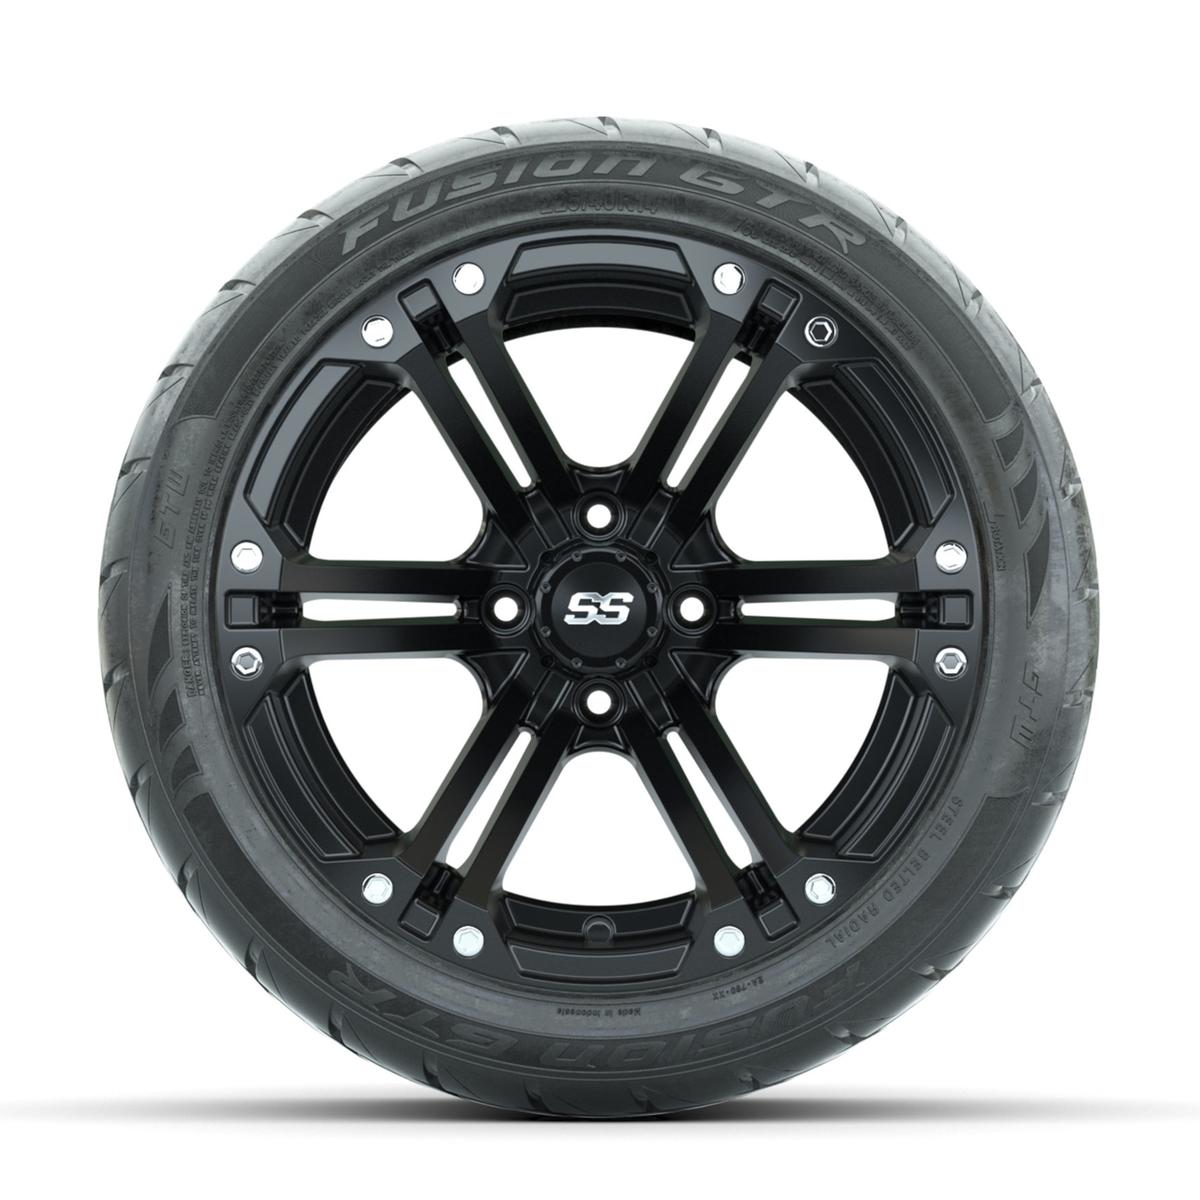 GTW Specter Matte Black 14 in Wheels with 225/40-R14 Fusion GTR Street Tires – Full Set